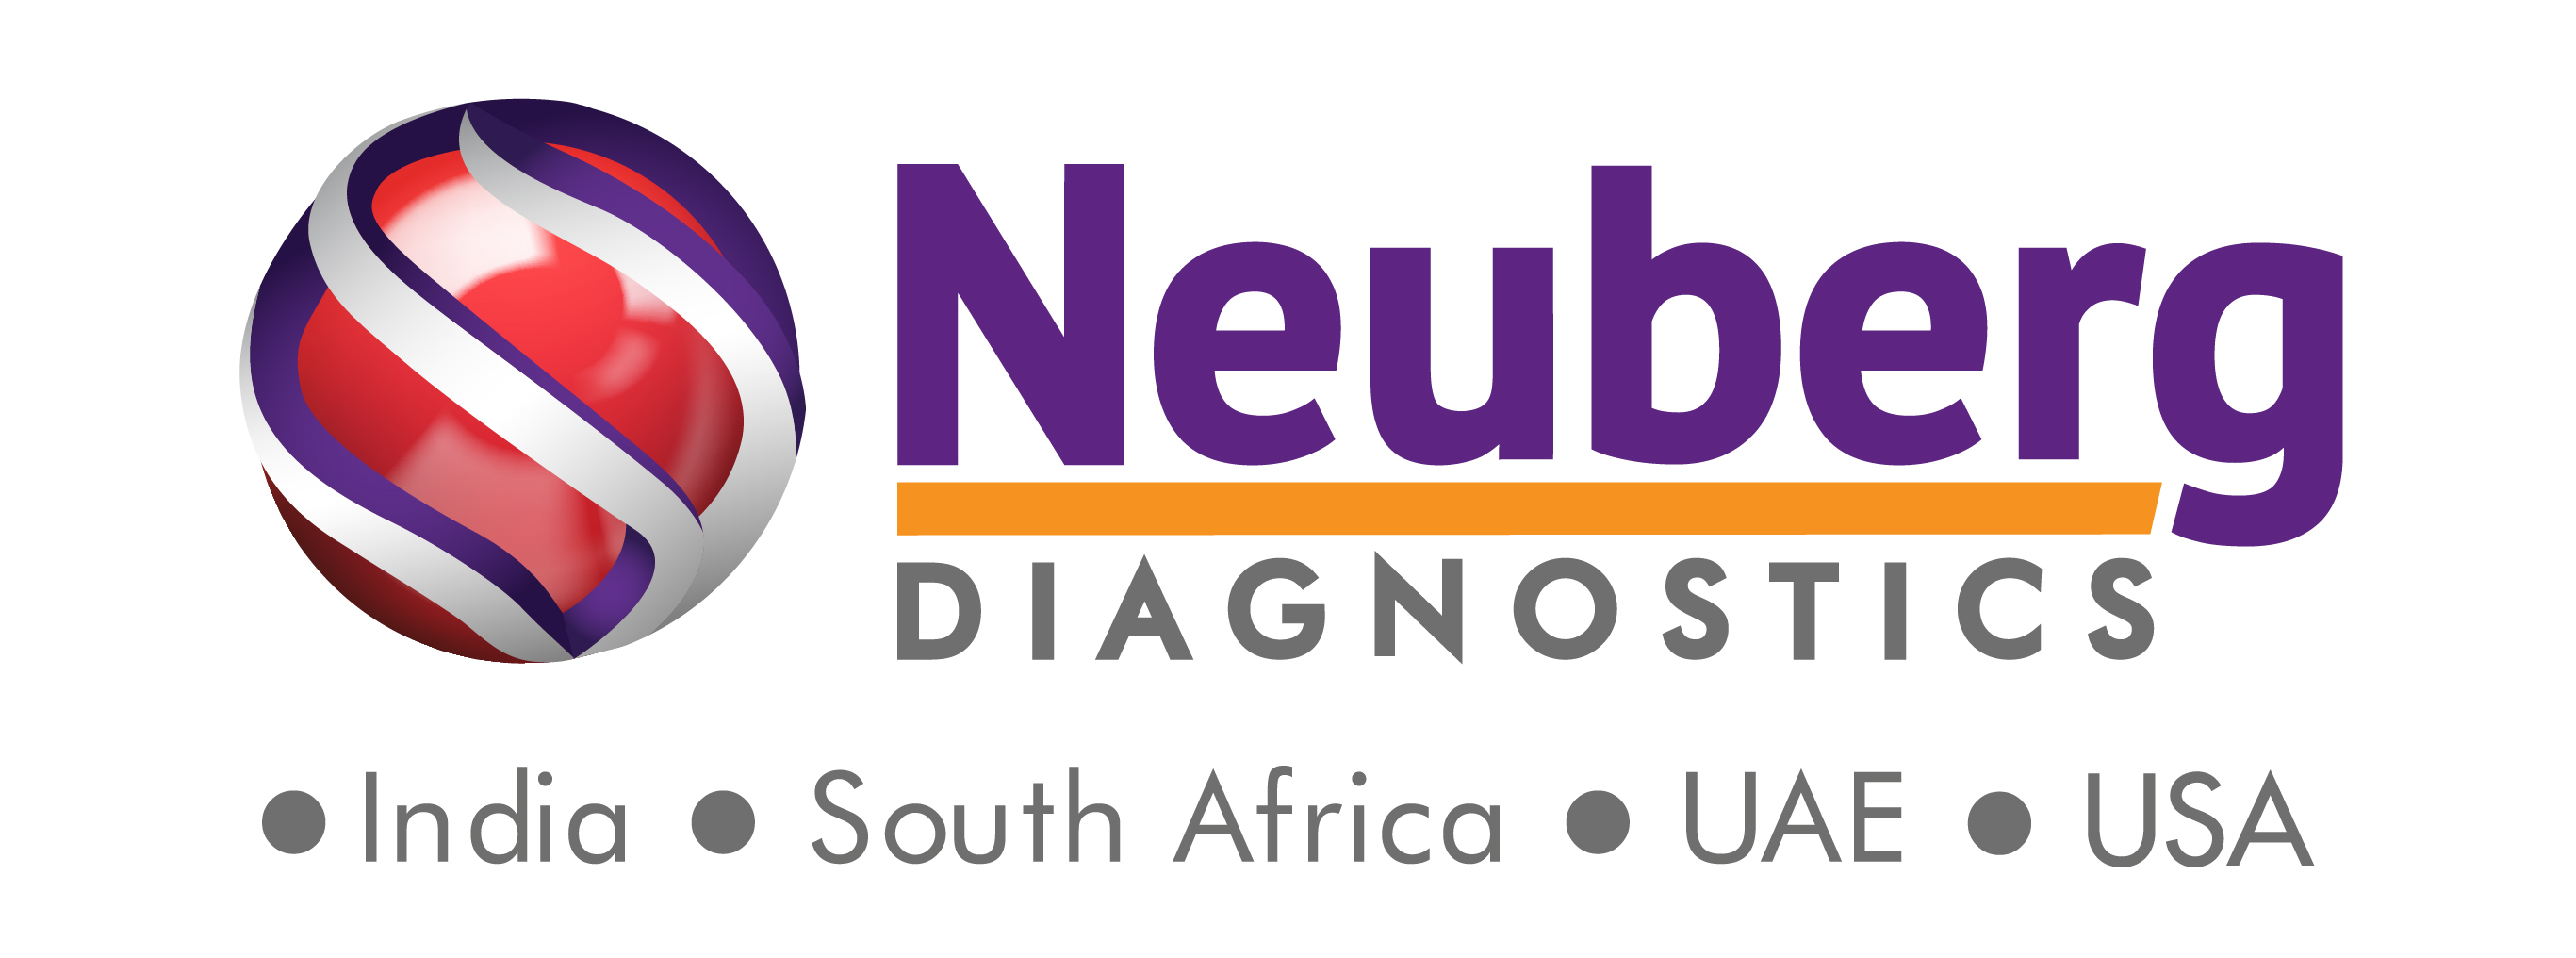 Neuberg Diagnostics is the official Diagnostics Partner for IPL 2022